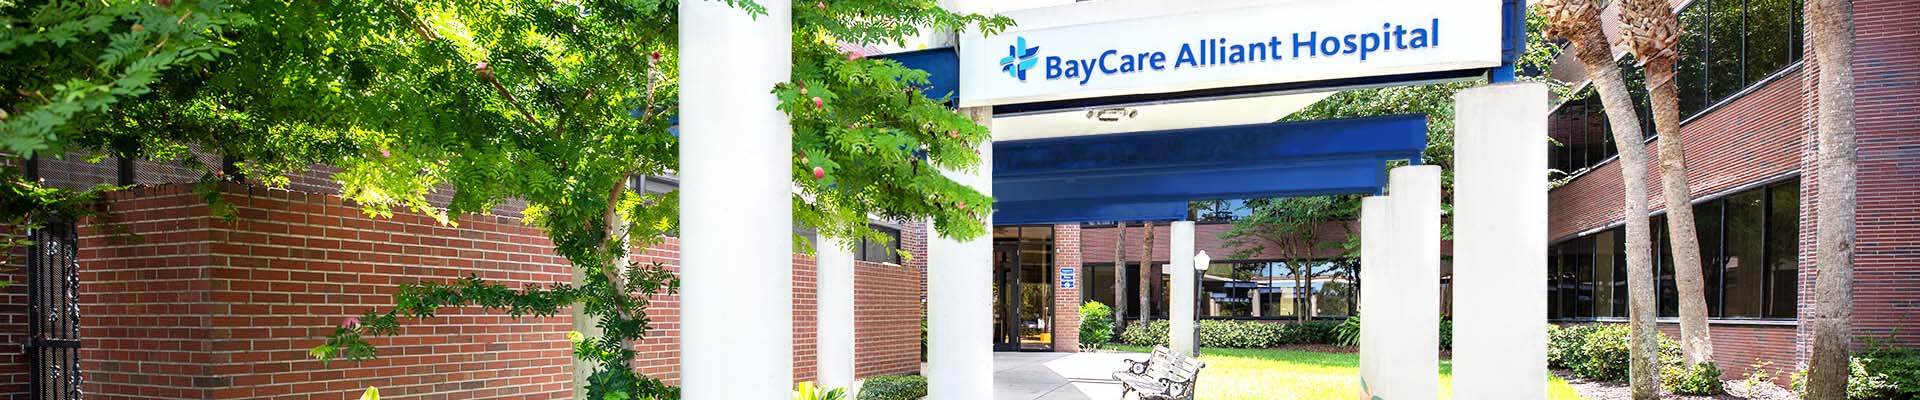 BayCare Alliant Hospital main entrance in Dunedin